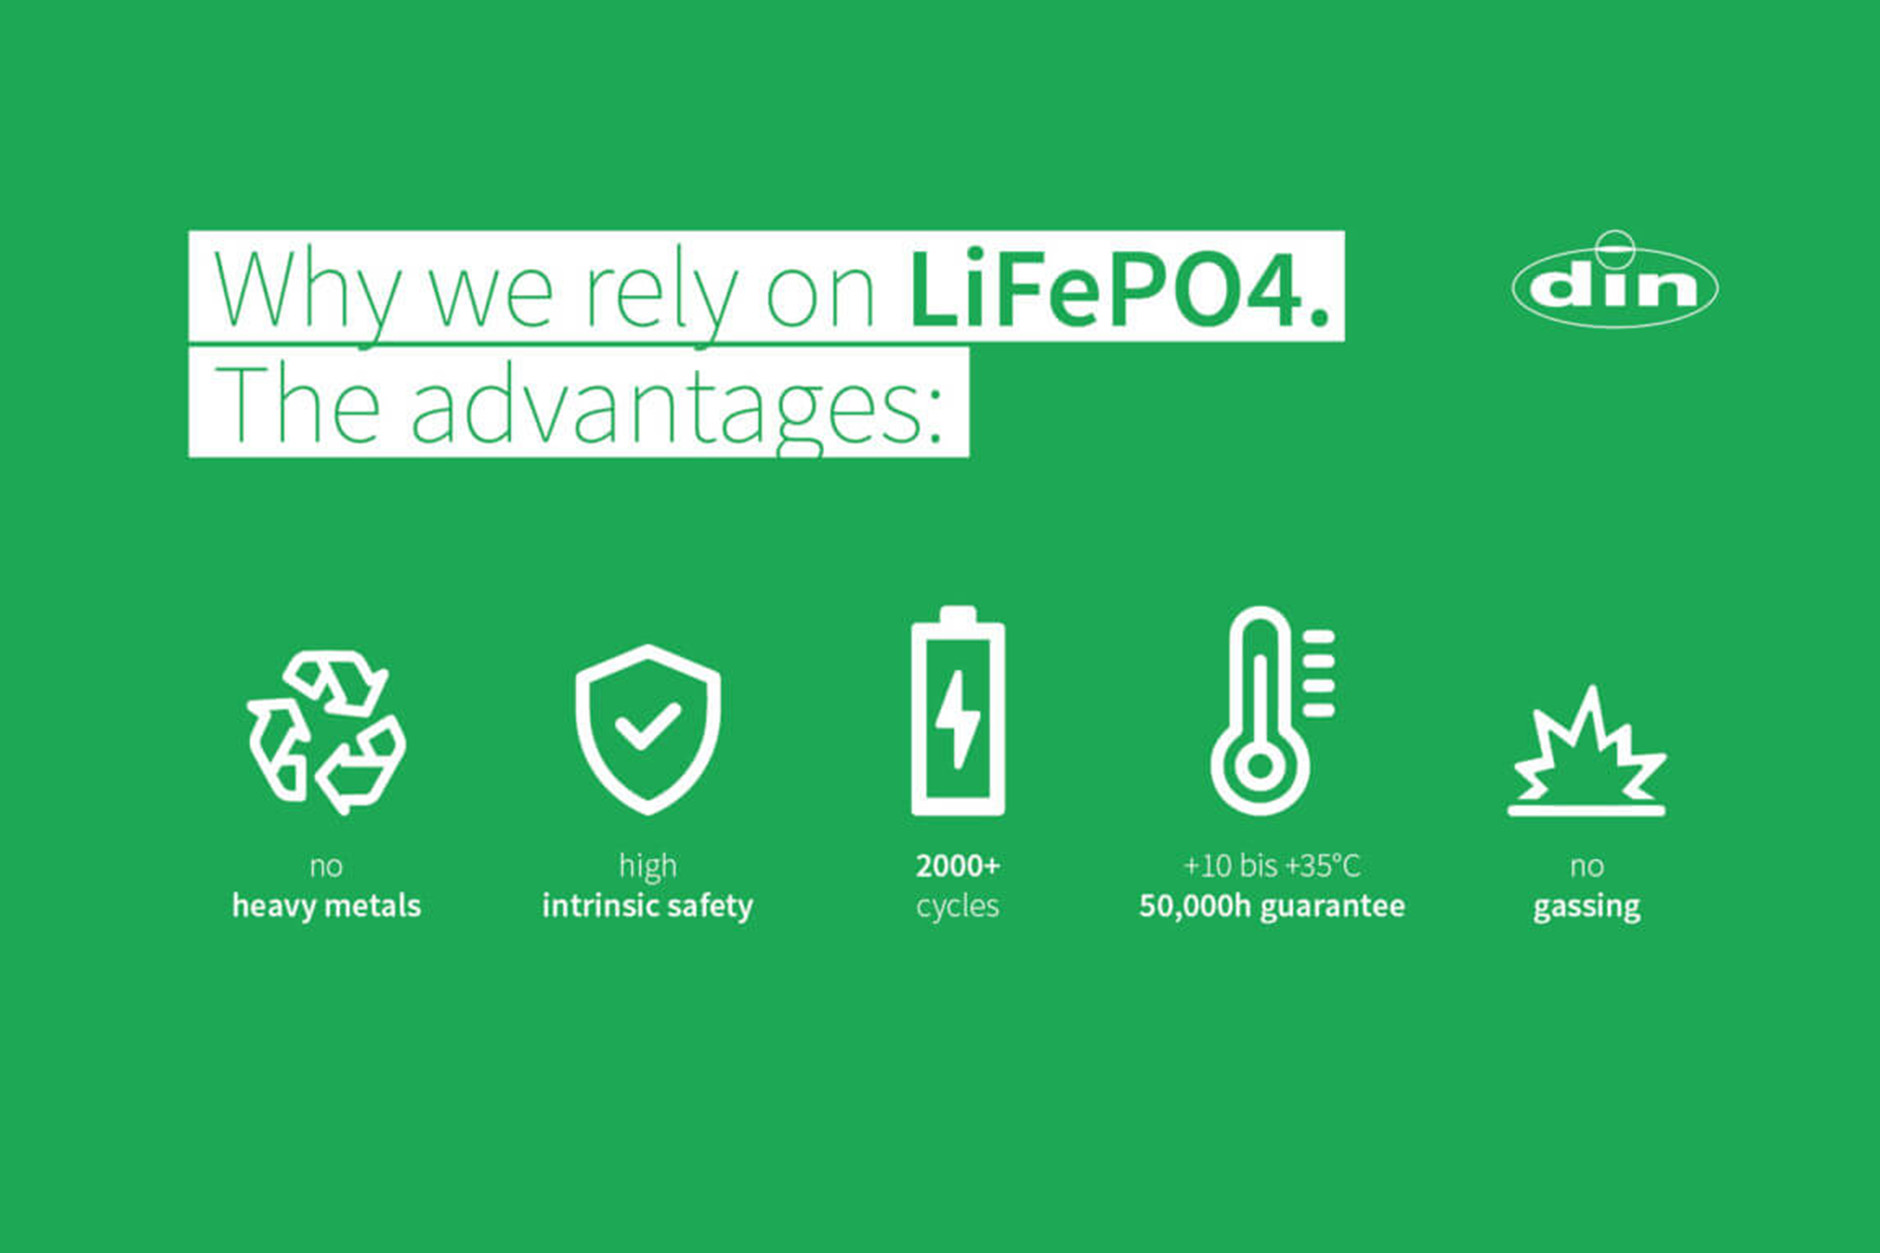 LiFePO4 battery: